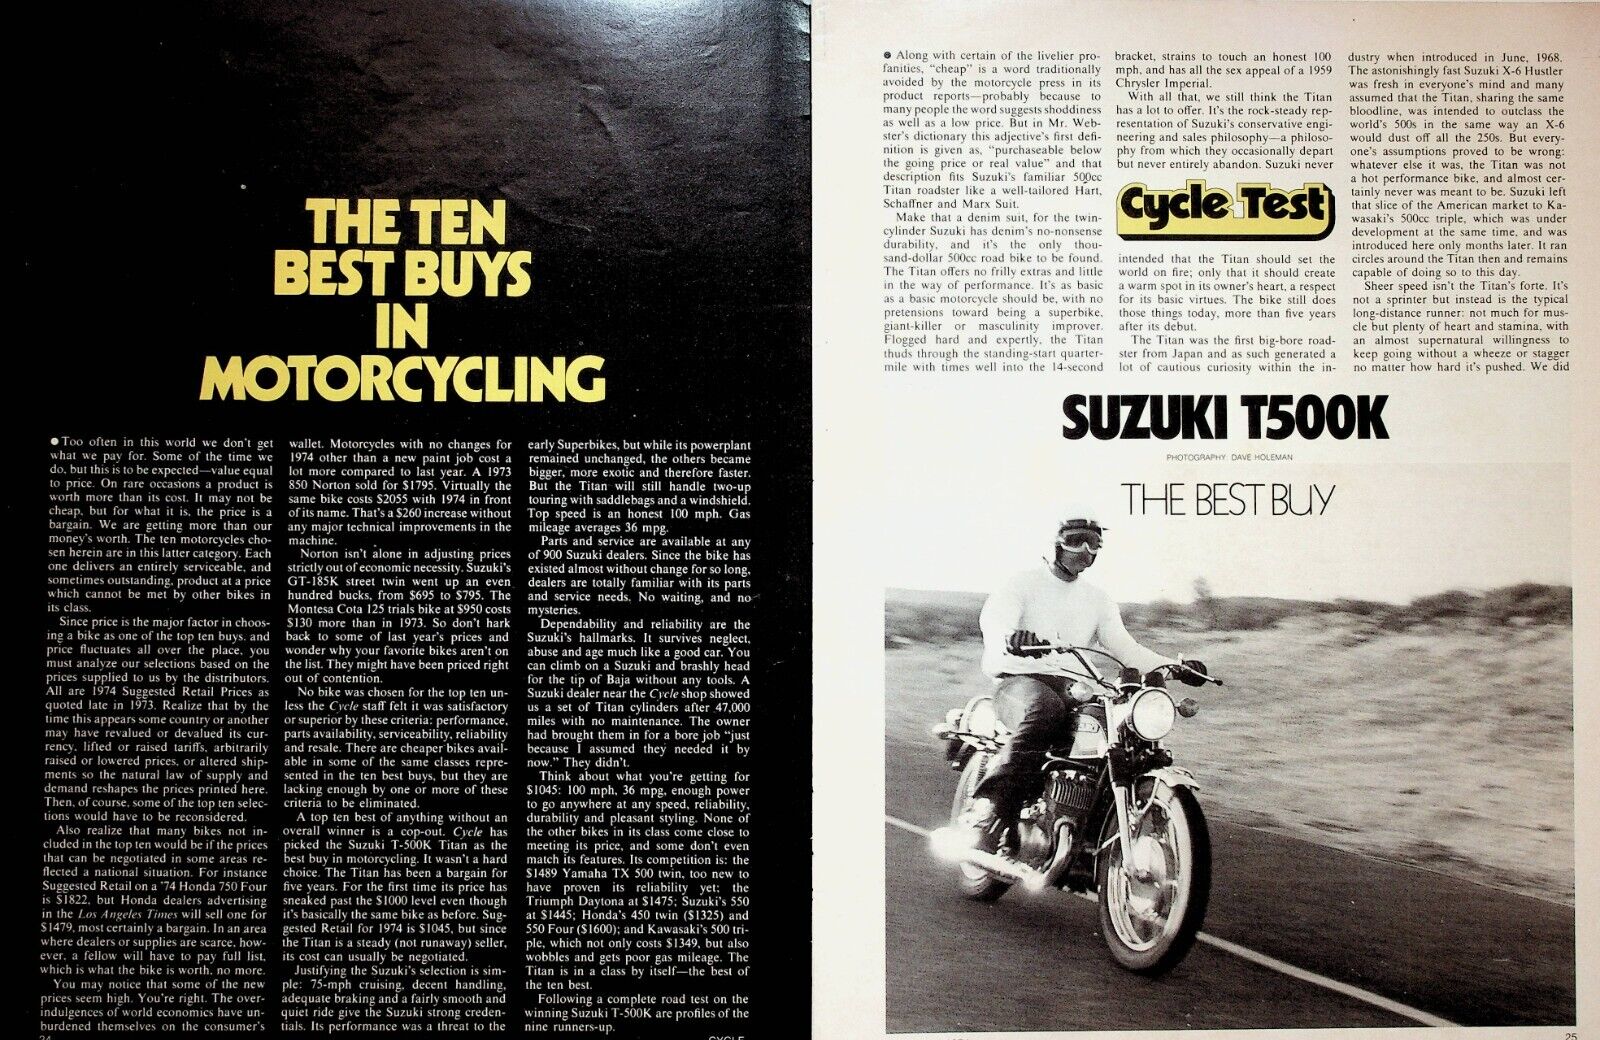 1974 Suzuki T500K Top Ten Best Buys - 5-Page Vintage Motorcycle Article